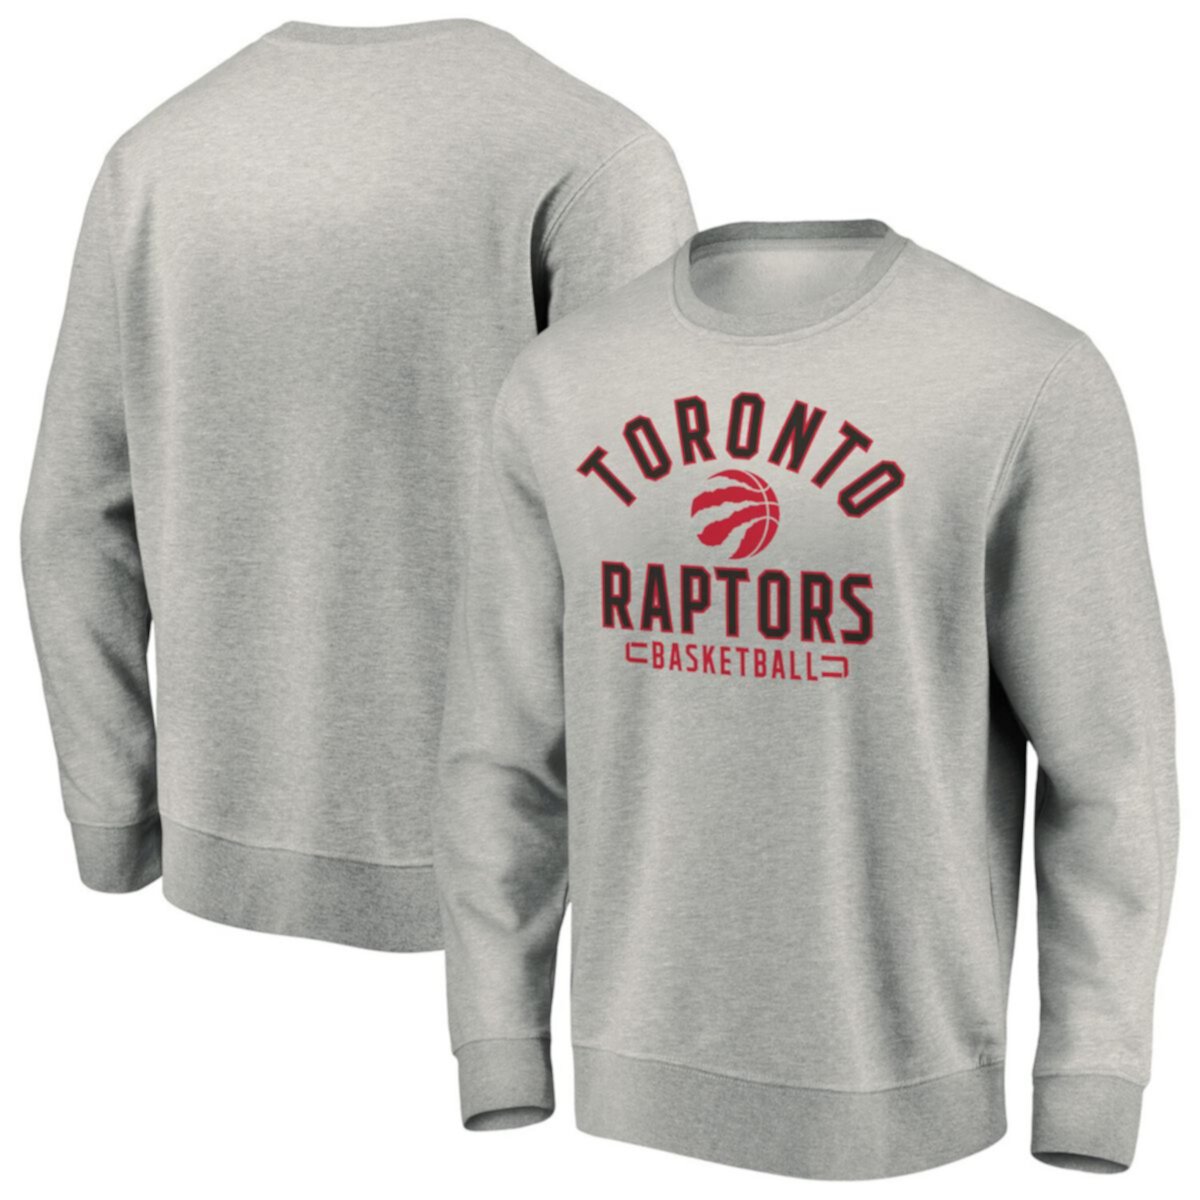 Men's Fanatics Branded Heathered Gray Toronto Raptors Iconic Team Arc Stack Fleece Sweatshirt Fanatics